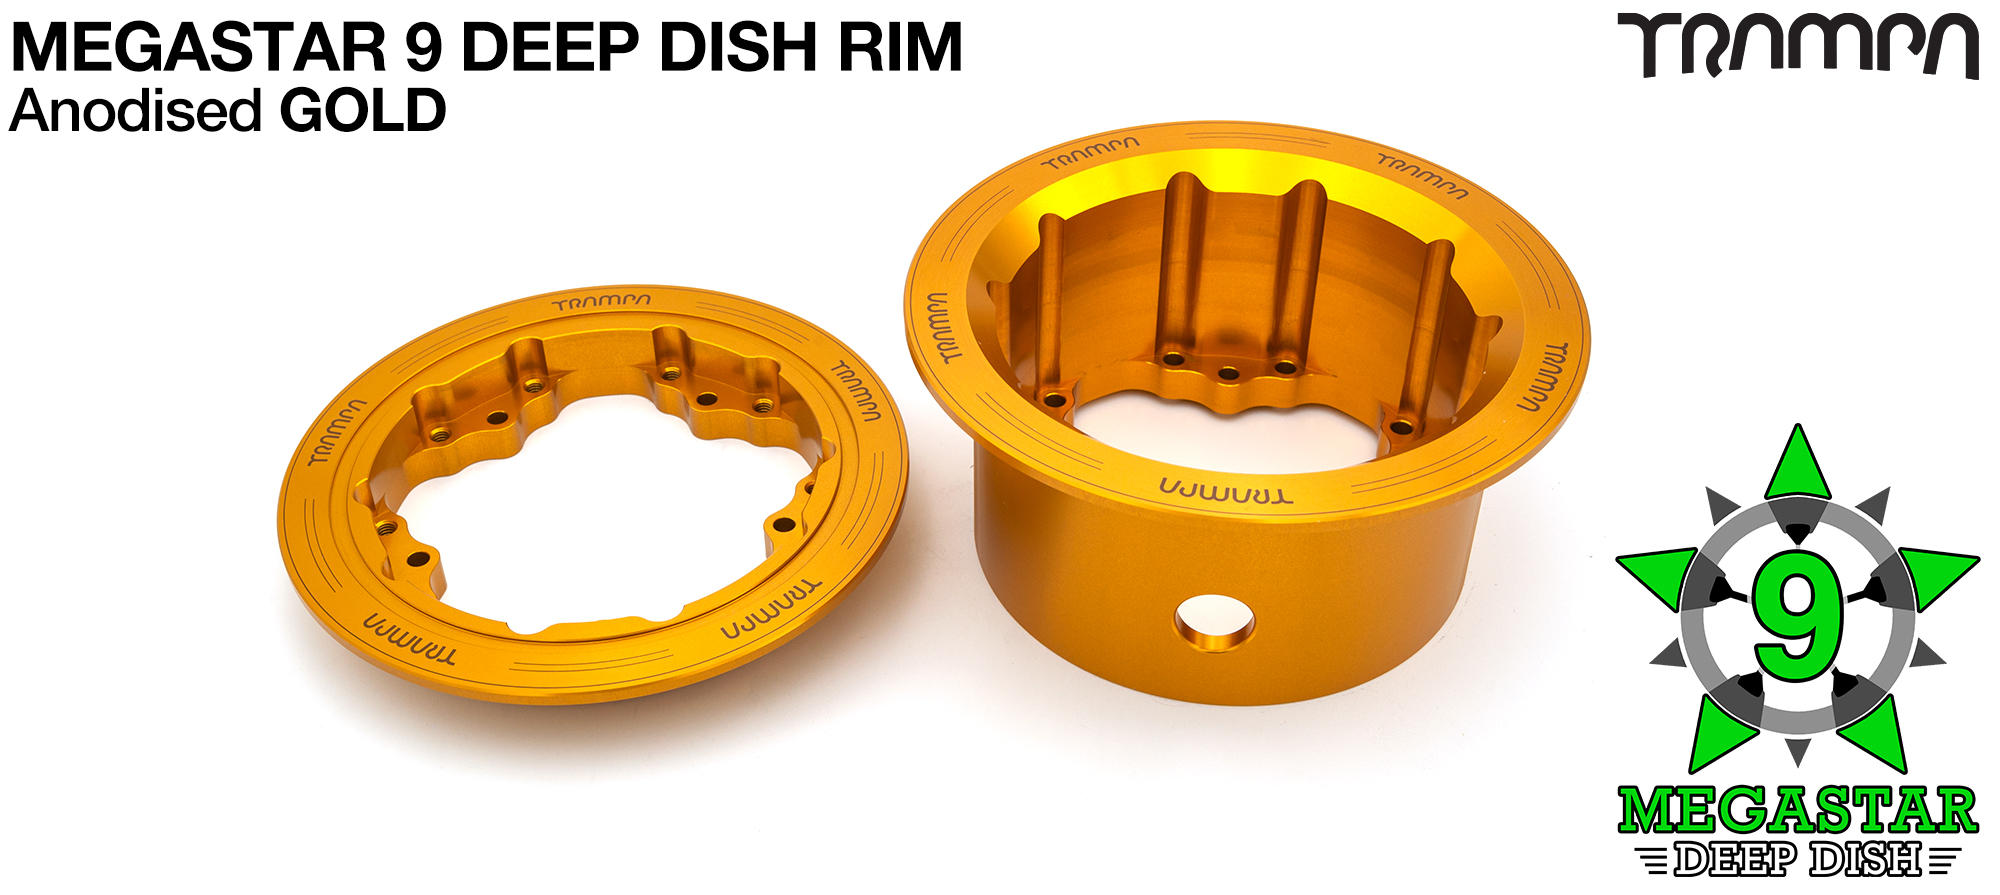 DEEP-DISH MEGASTAR 9 Rims on the FRONT - GOLD